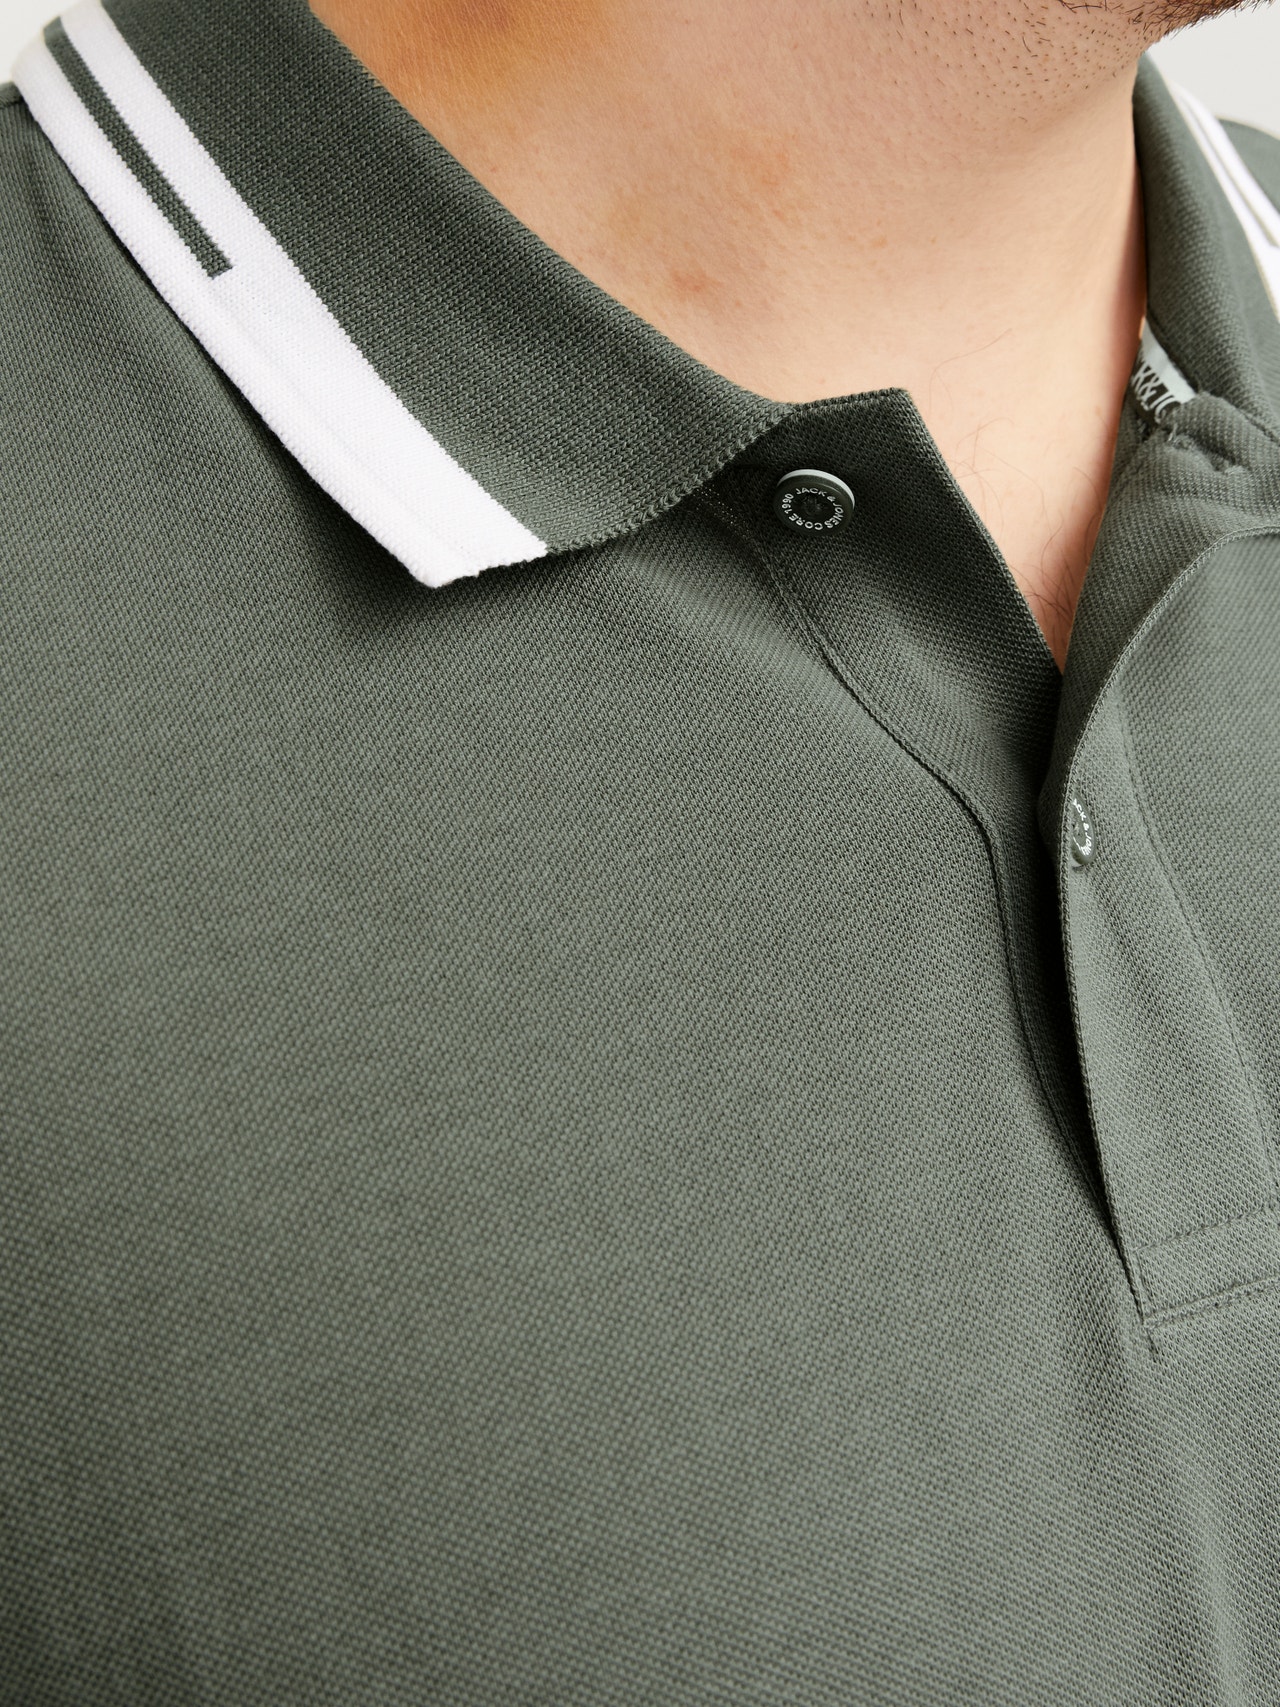 Jack & Jones Plus Size T-shirt Uni -Agave Green - 12257374